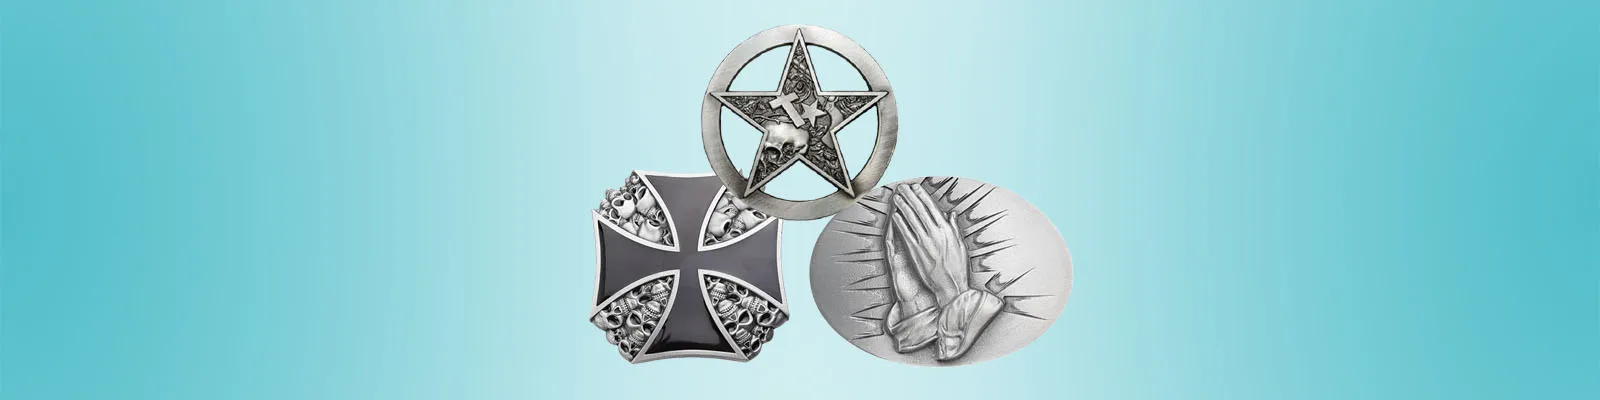 Stars, Crosses & Religion Belt Buckles Category Image | Buckle.de